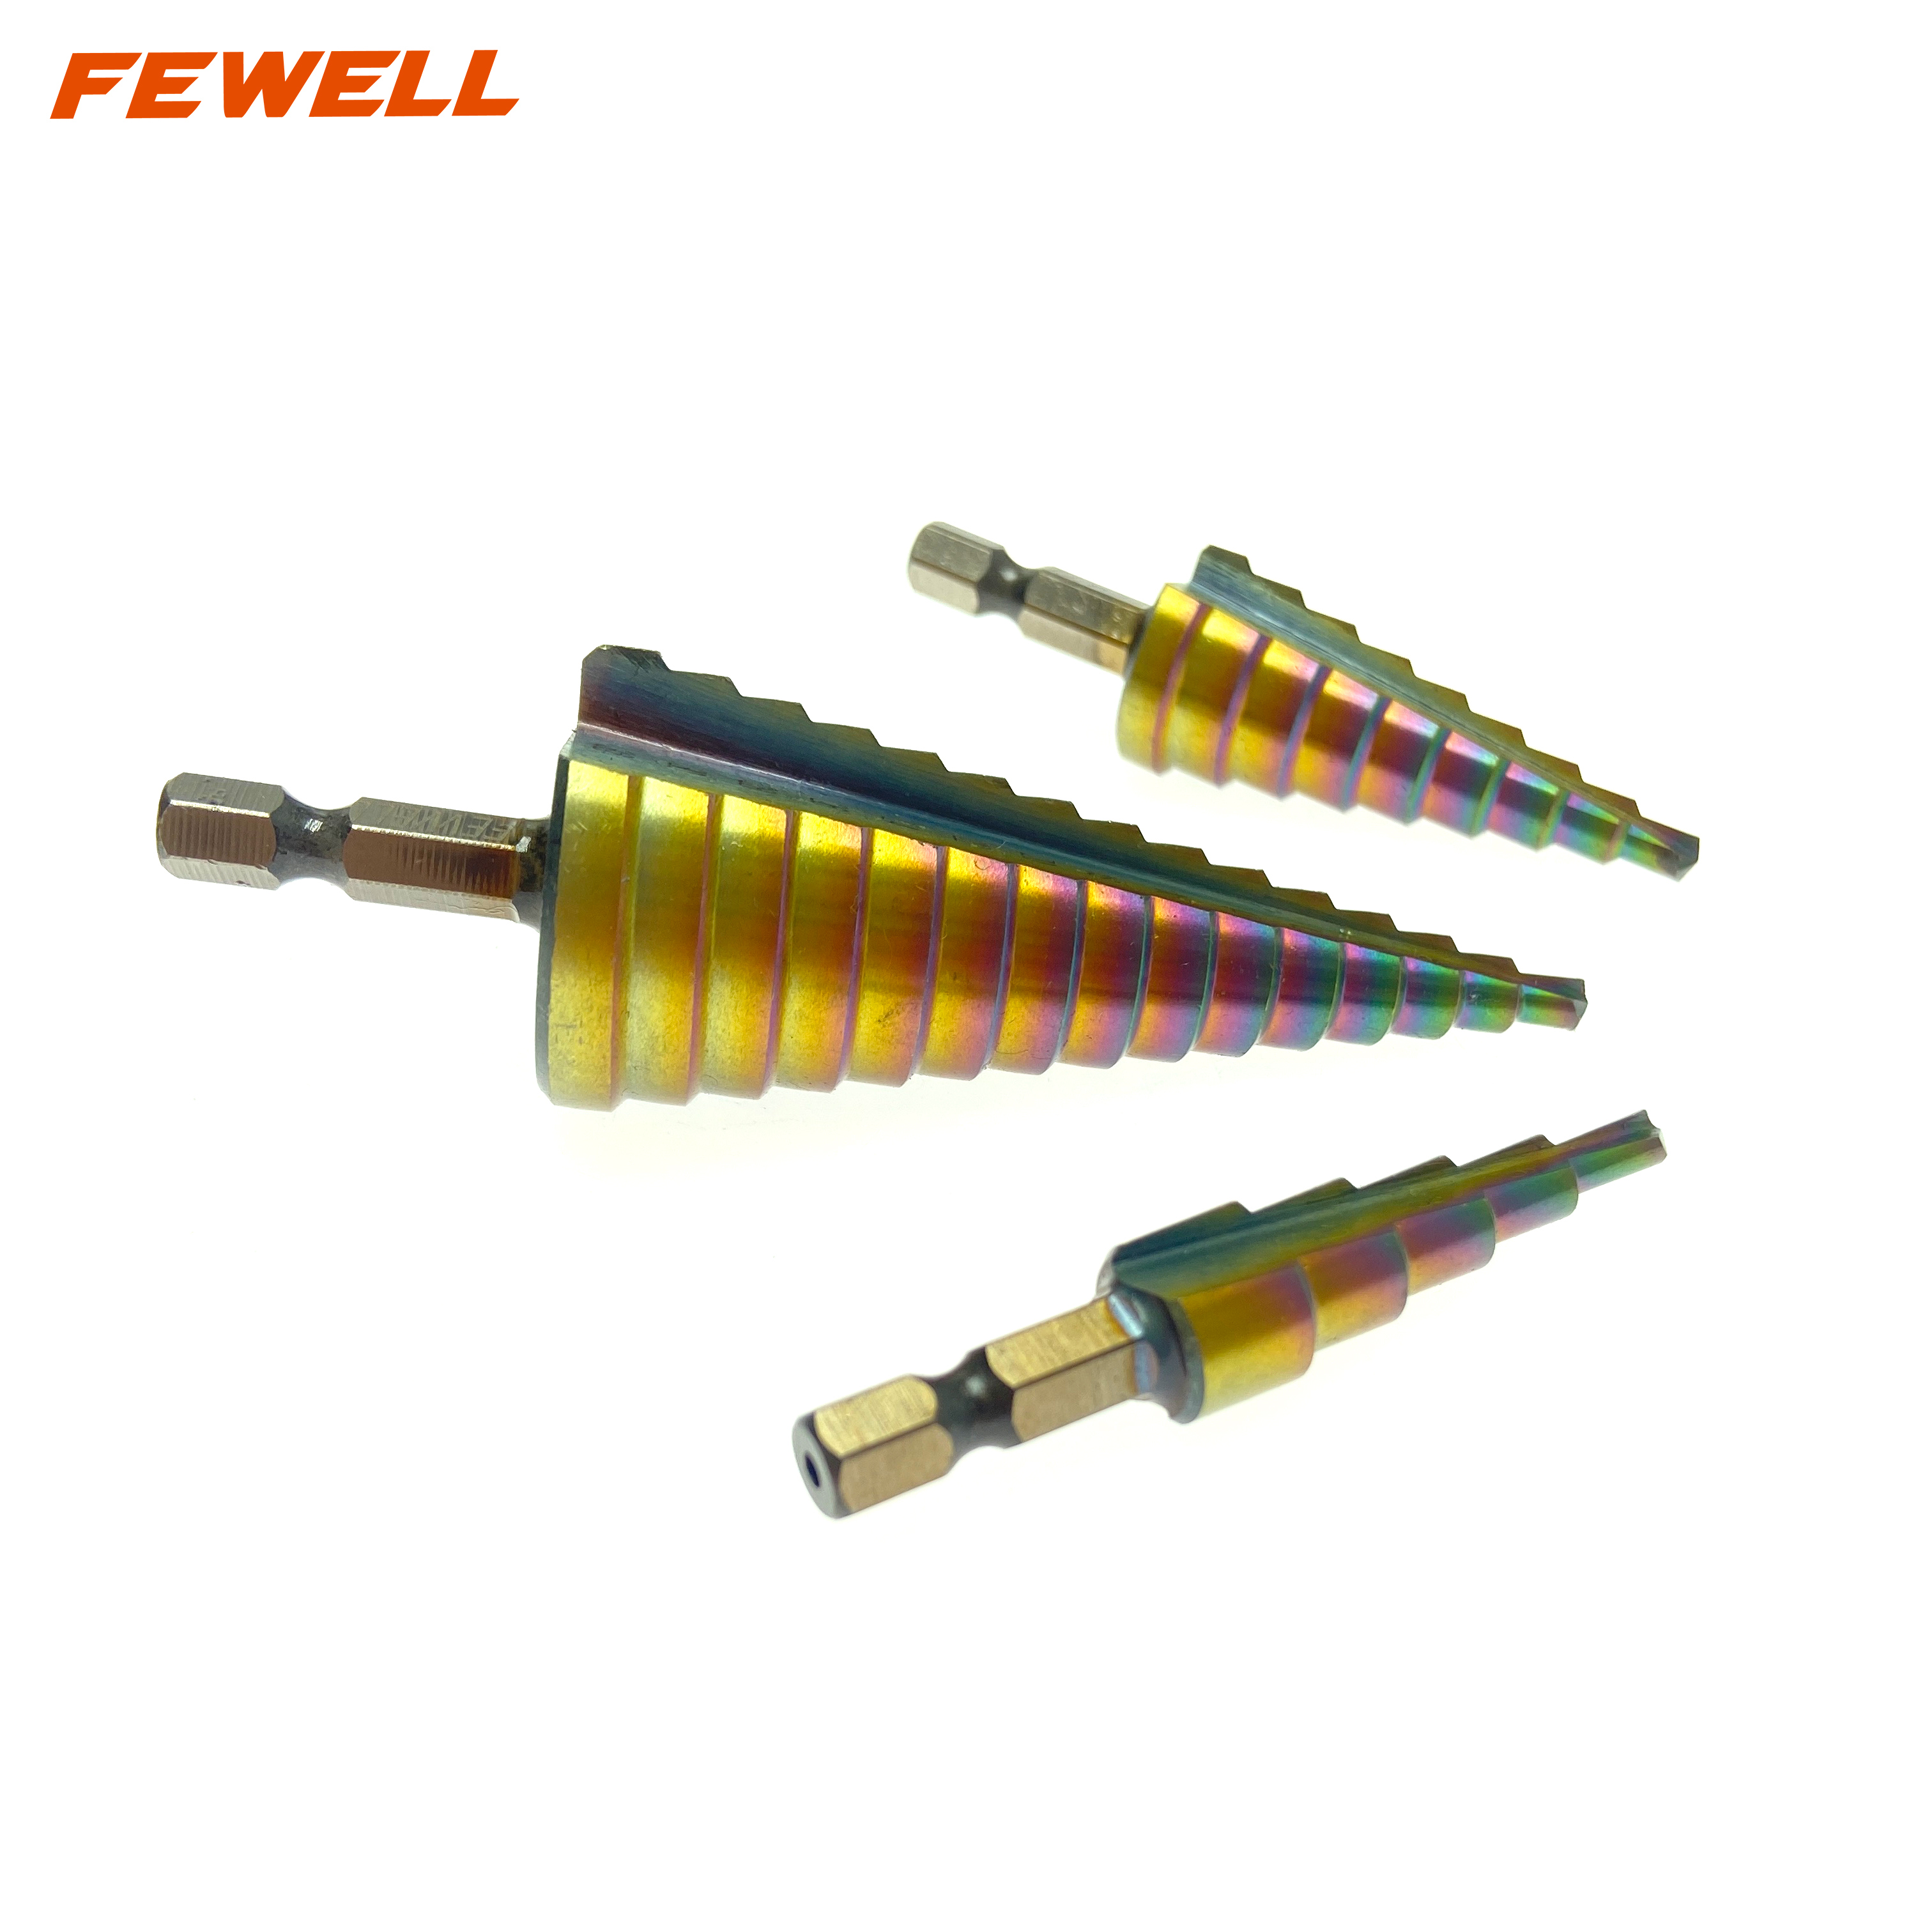 High quality 3PCS 4-12mm 4-20mm 4-32mm HSS 6542 Hexagon Shank straight flute Titanium Step Drill Bits for Metal Drilling